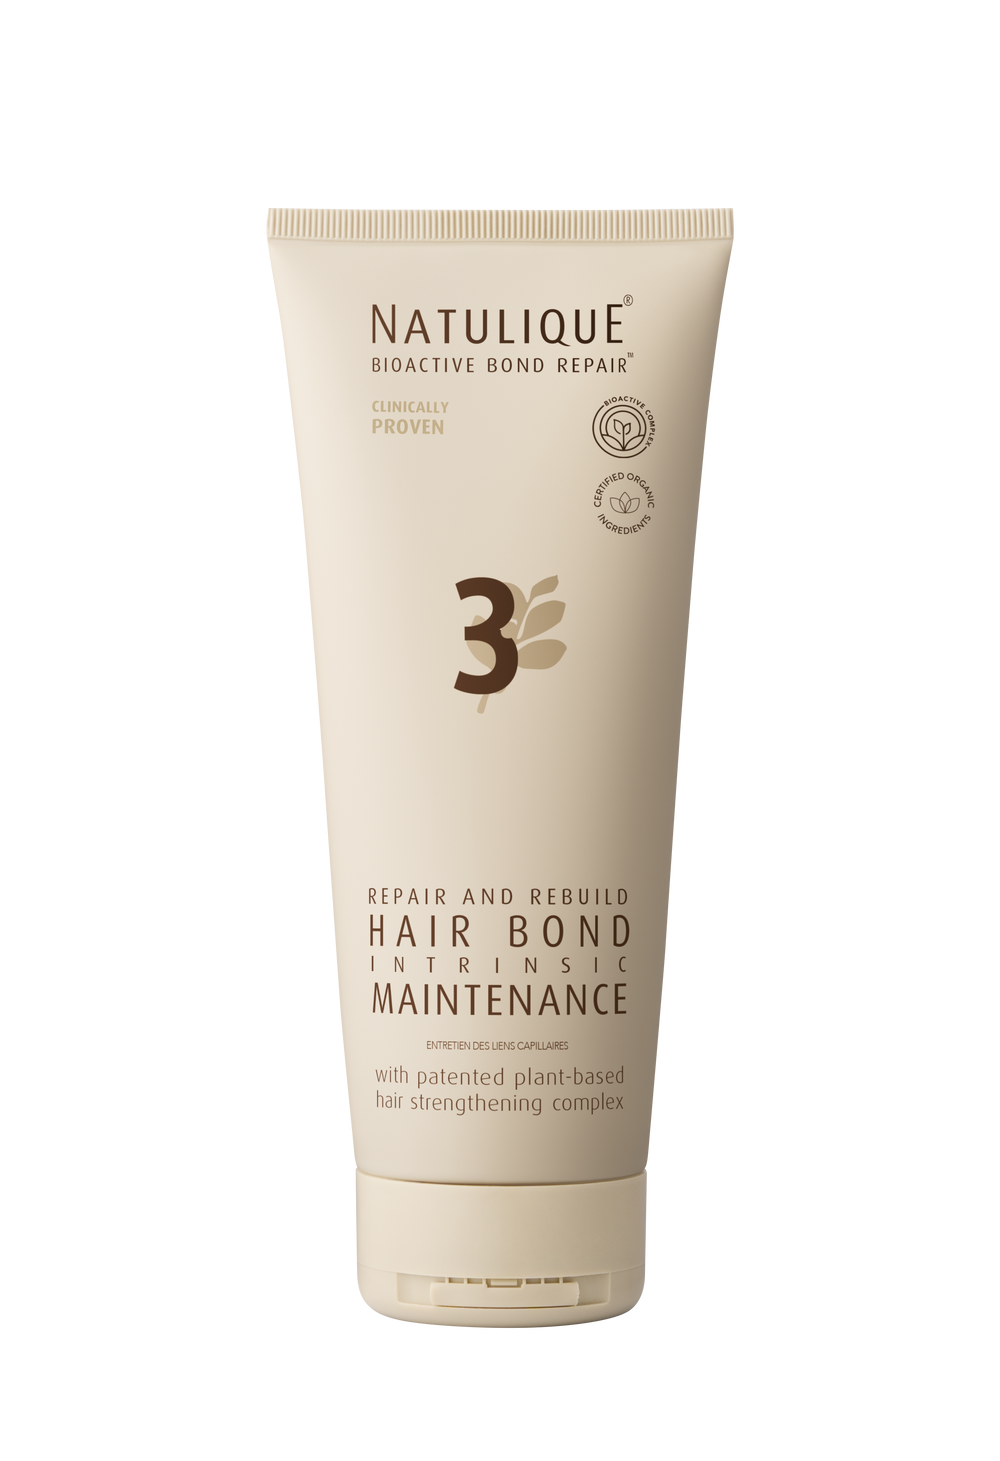 NATULIQUE Hair Bond Intrinsic Maintenance Step 3 (200ml)